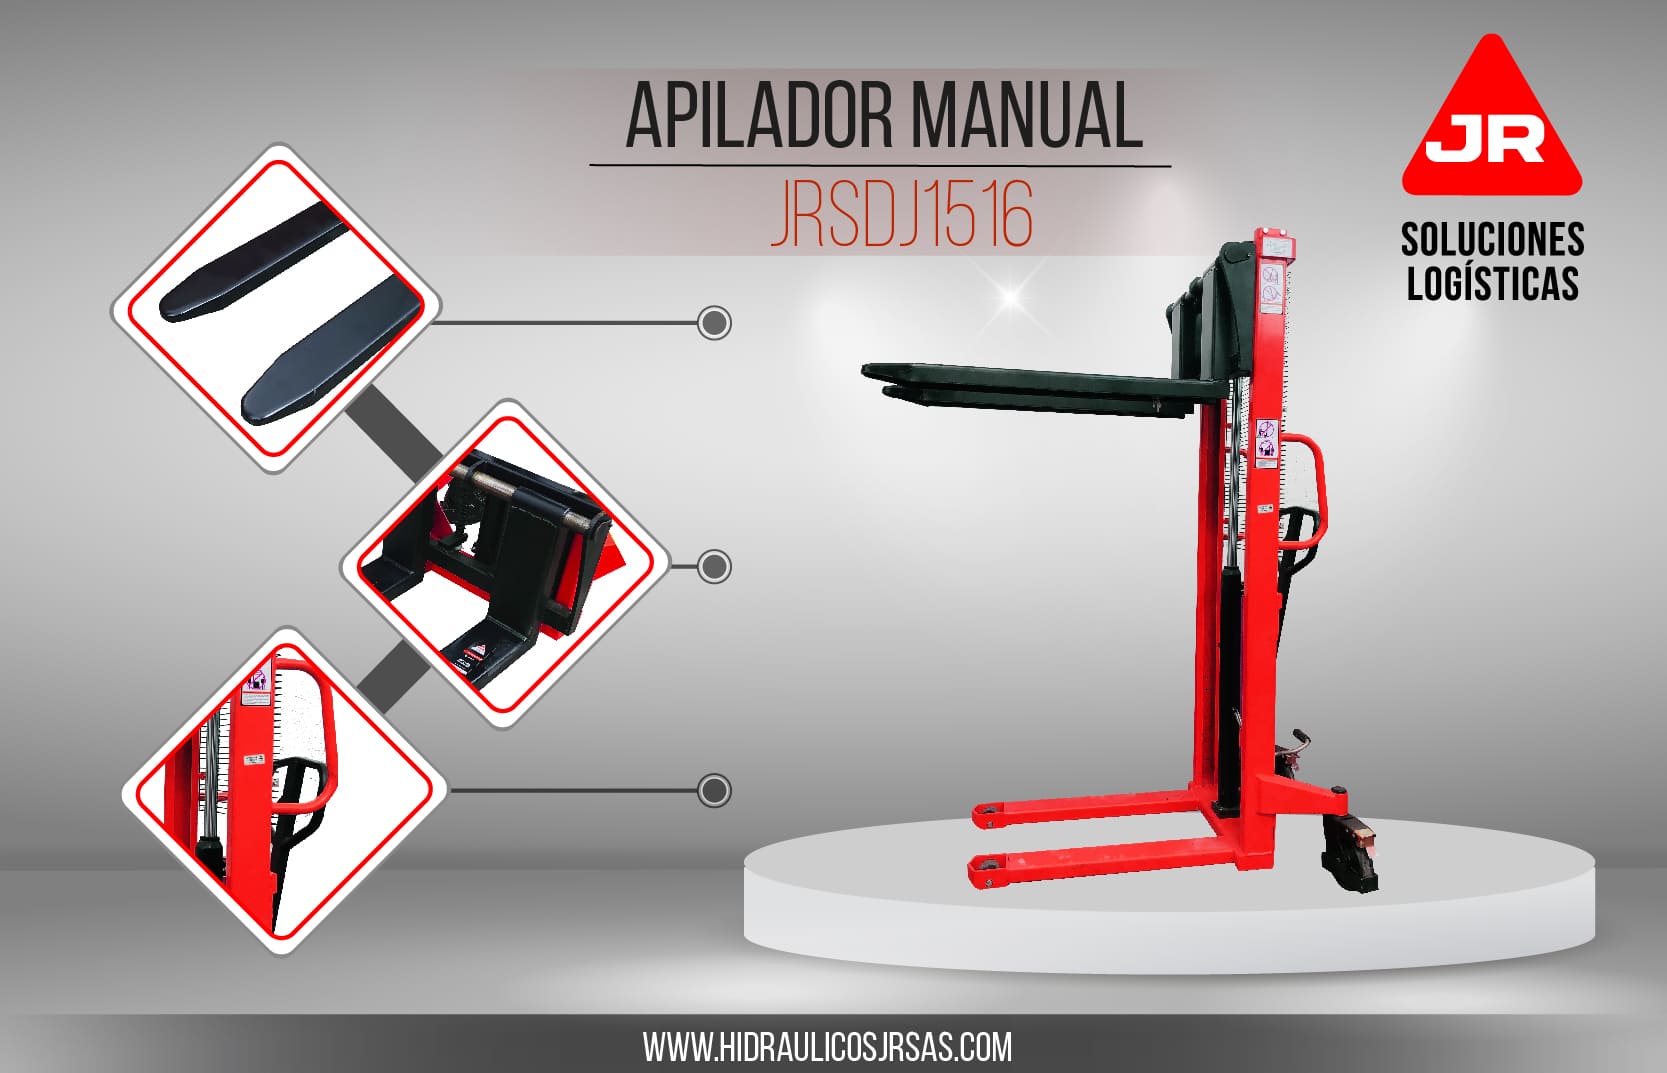 Apilador Manual - Apilador Ref. JRSDJ1516